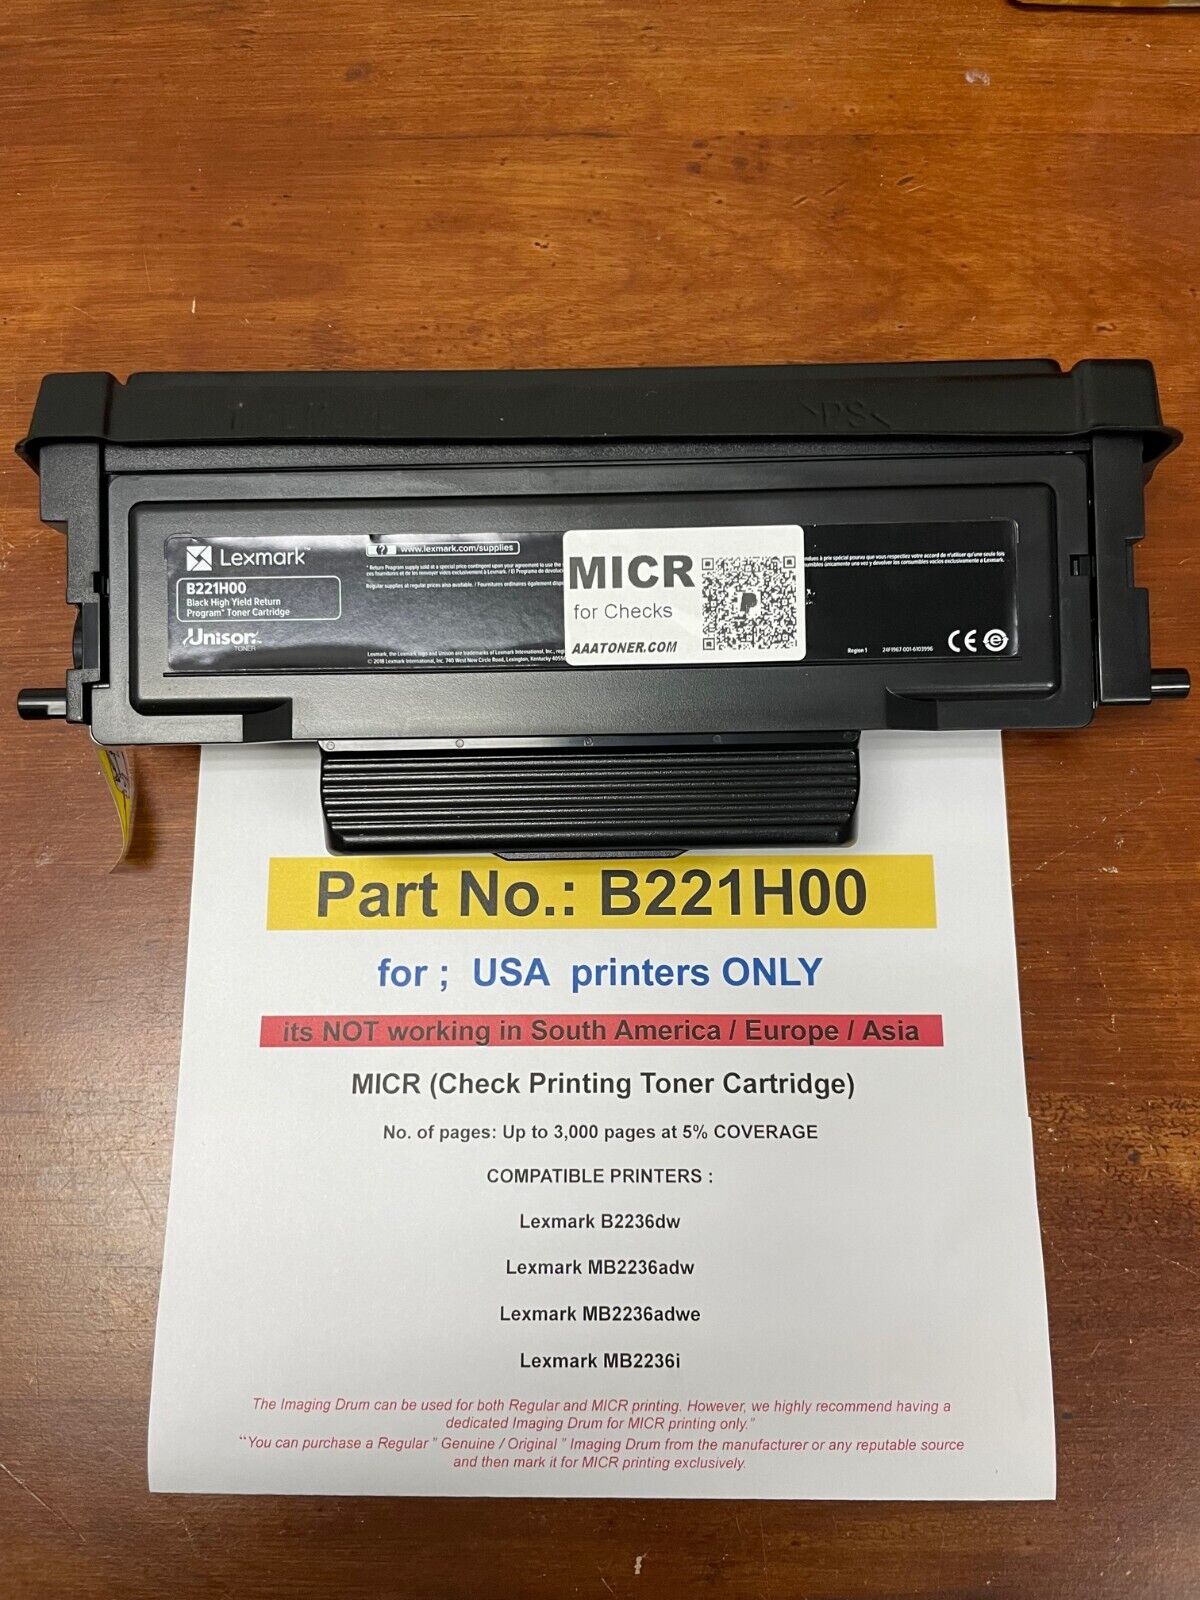 MICR (Check Print) for Lexmark B2236dw, MB2236adw, MB2236 Toner Cartridge